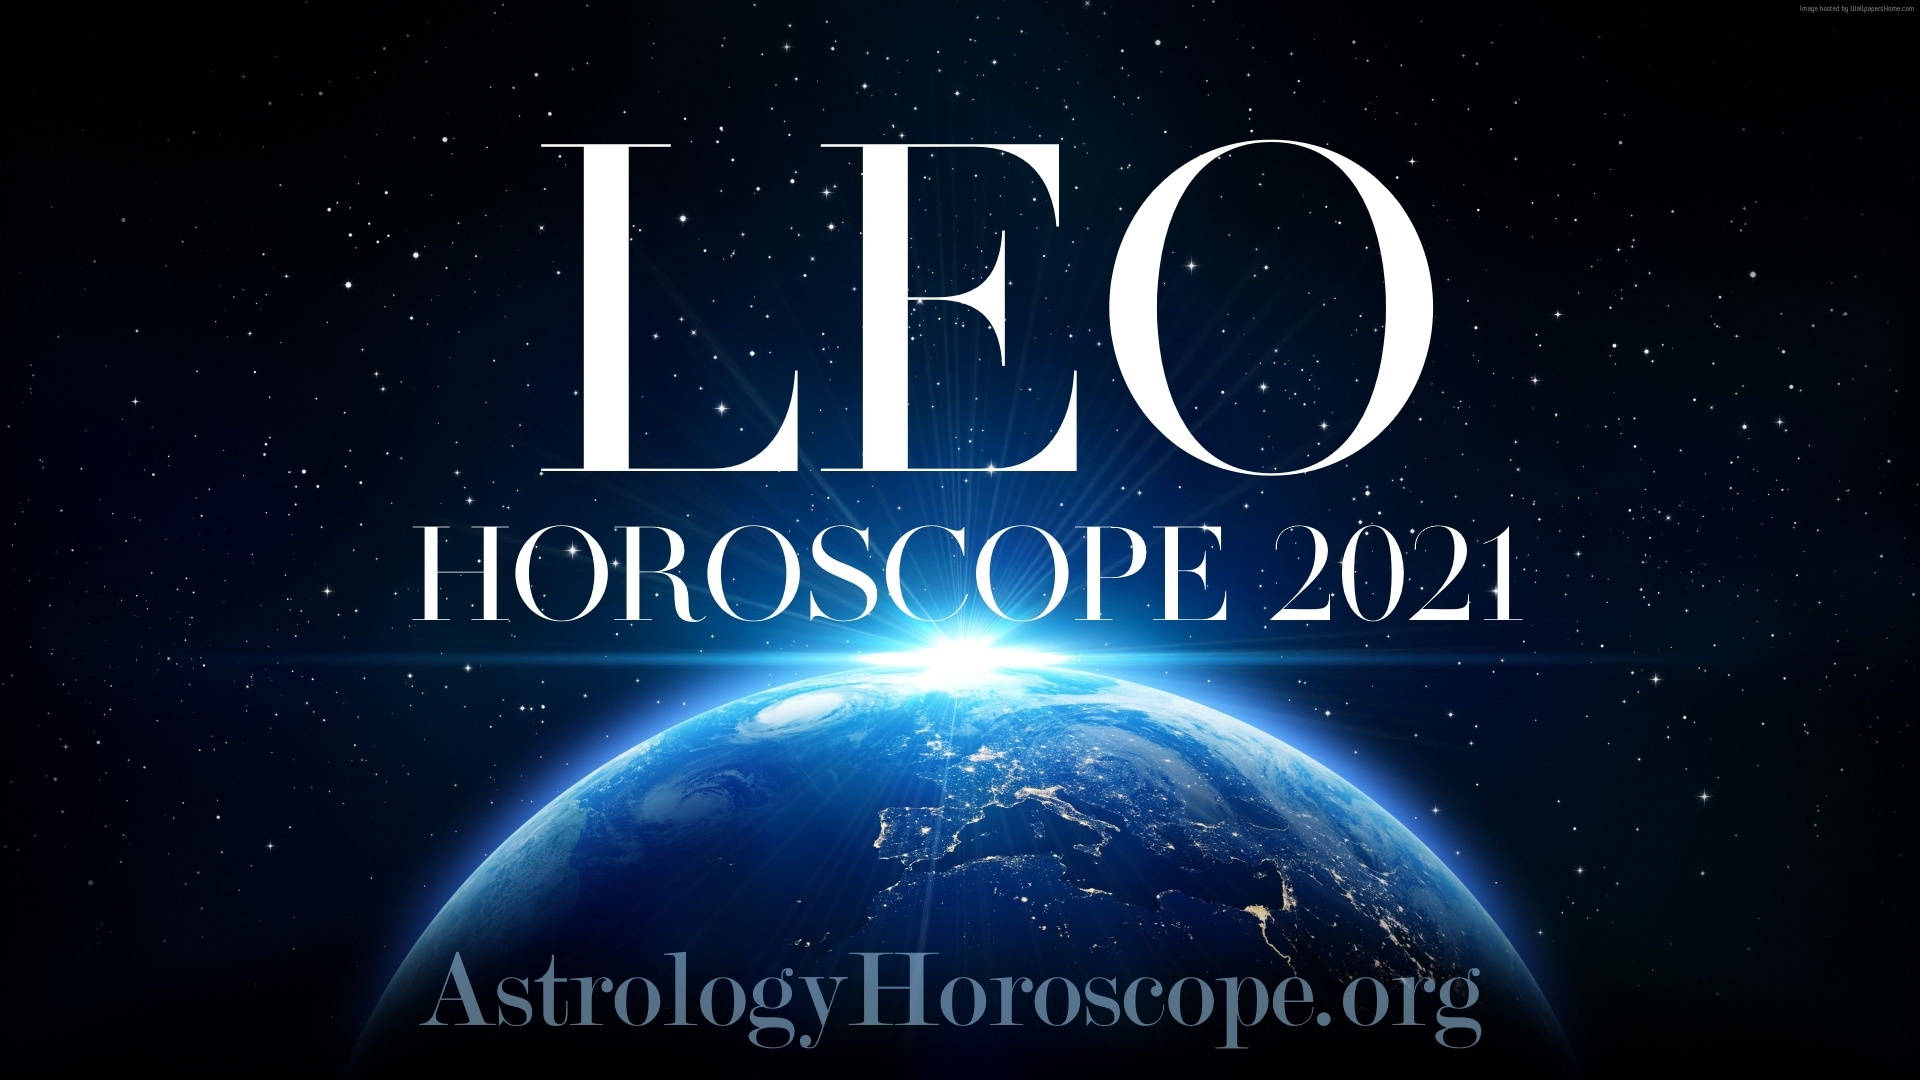 Leo Horoscope 2021 - Horoscope 2021